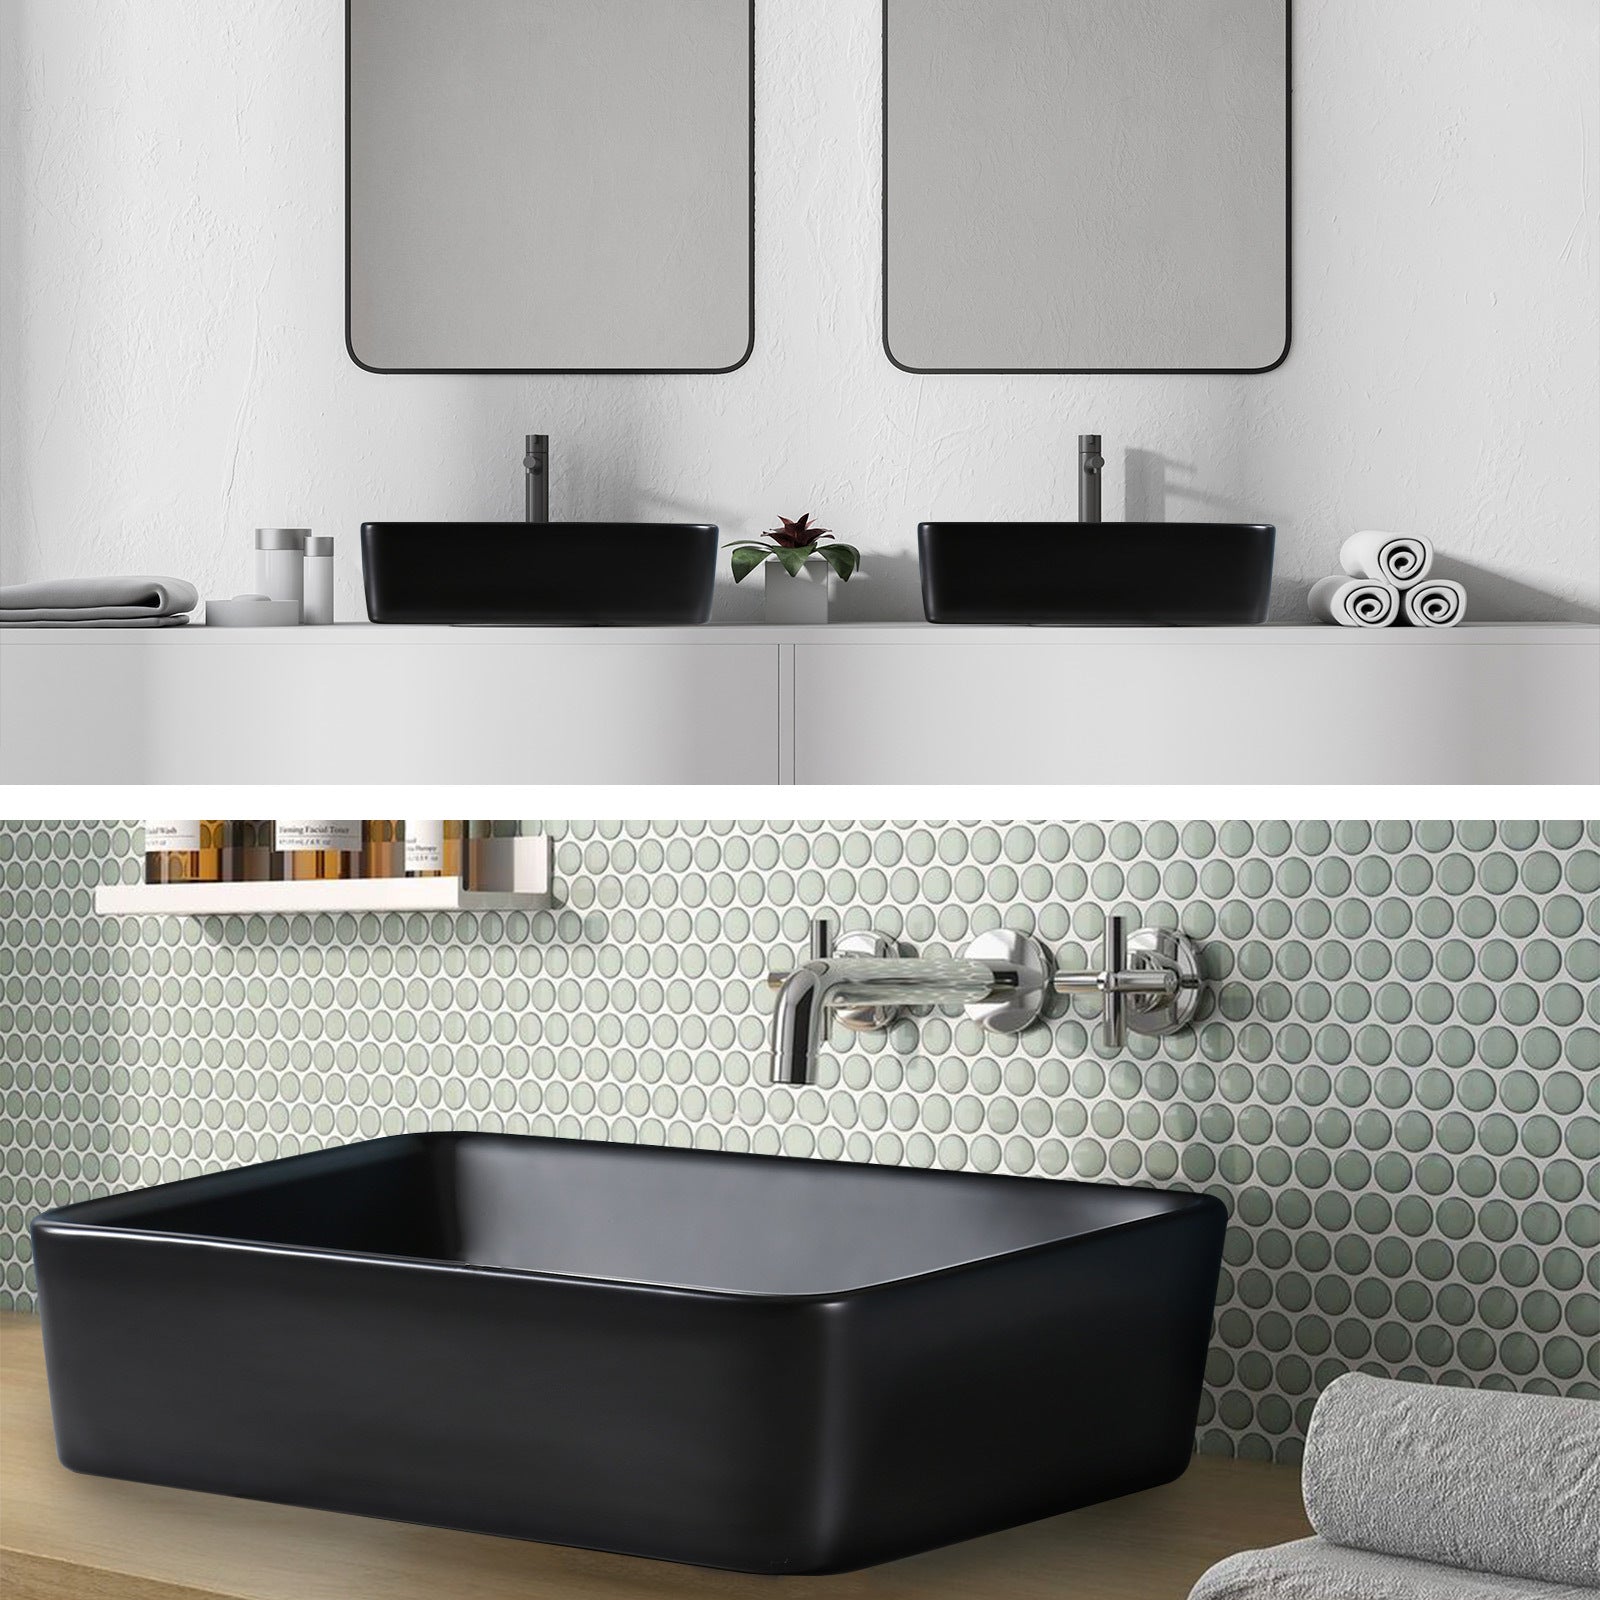 Muriel 48 x 37.5 x 13cm Black Ceramic Bathroom Basin Vanity Sink Above Counter Top Mount Bowl